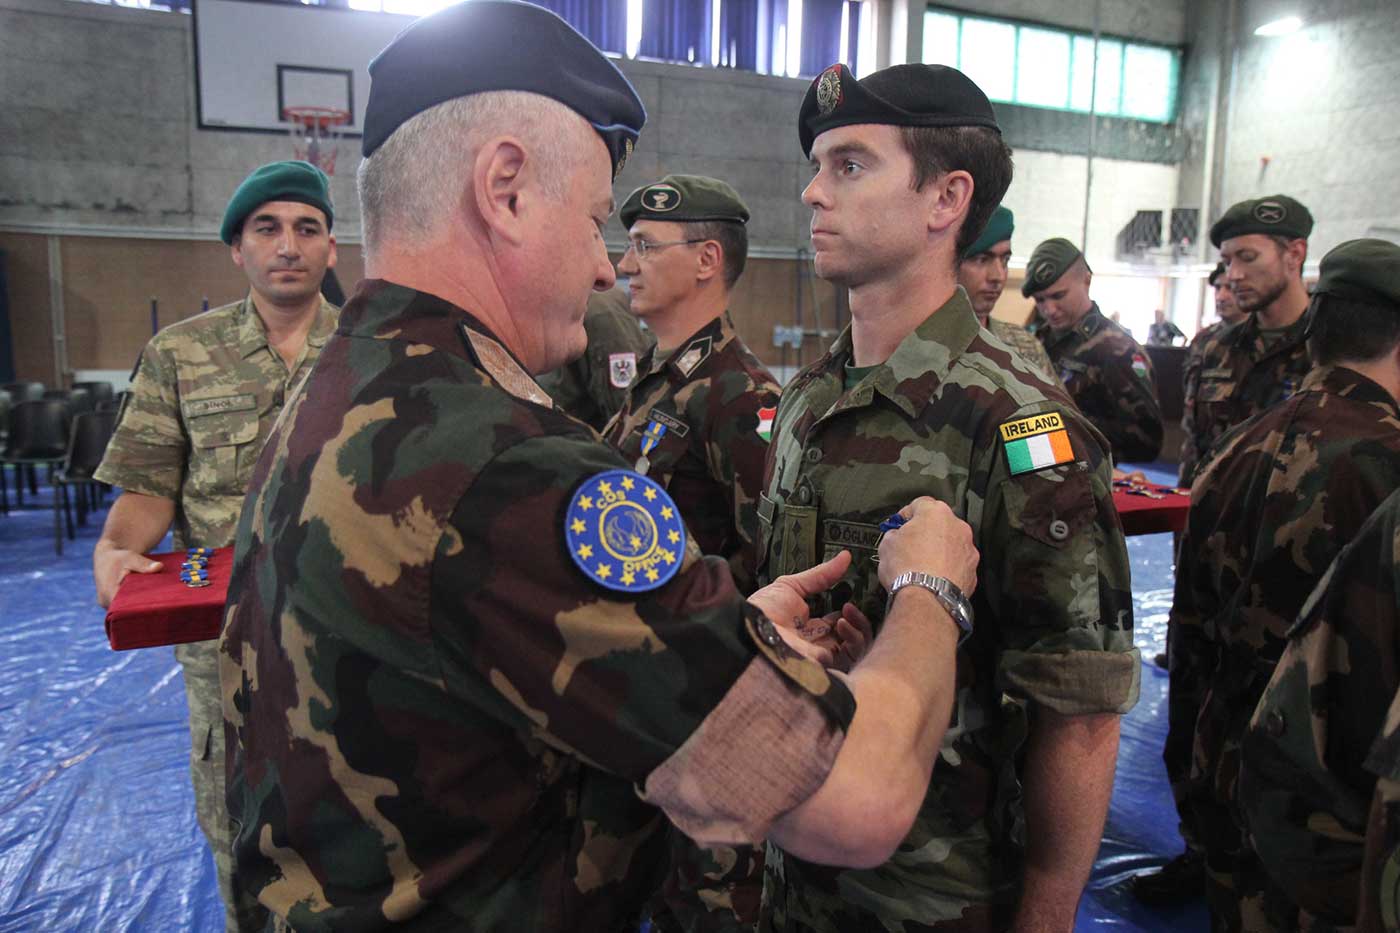 Chief of Staff (COS) of EUFOR, Brigadier General Albert Sáfár presenting OP ALTHEA EUFOR Medal to Captain Gary Holohan Irish Army.